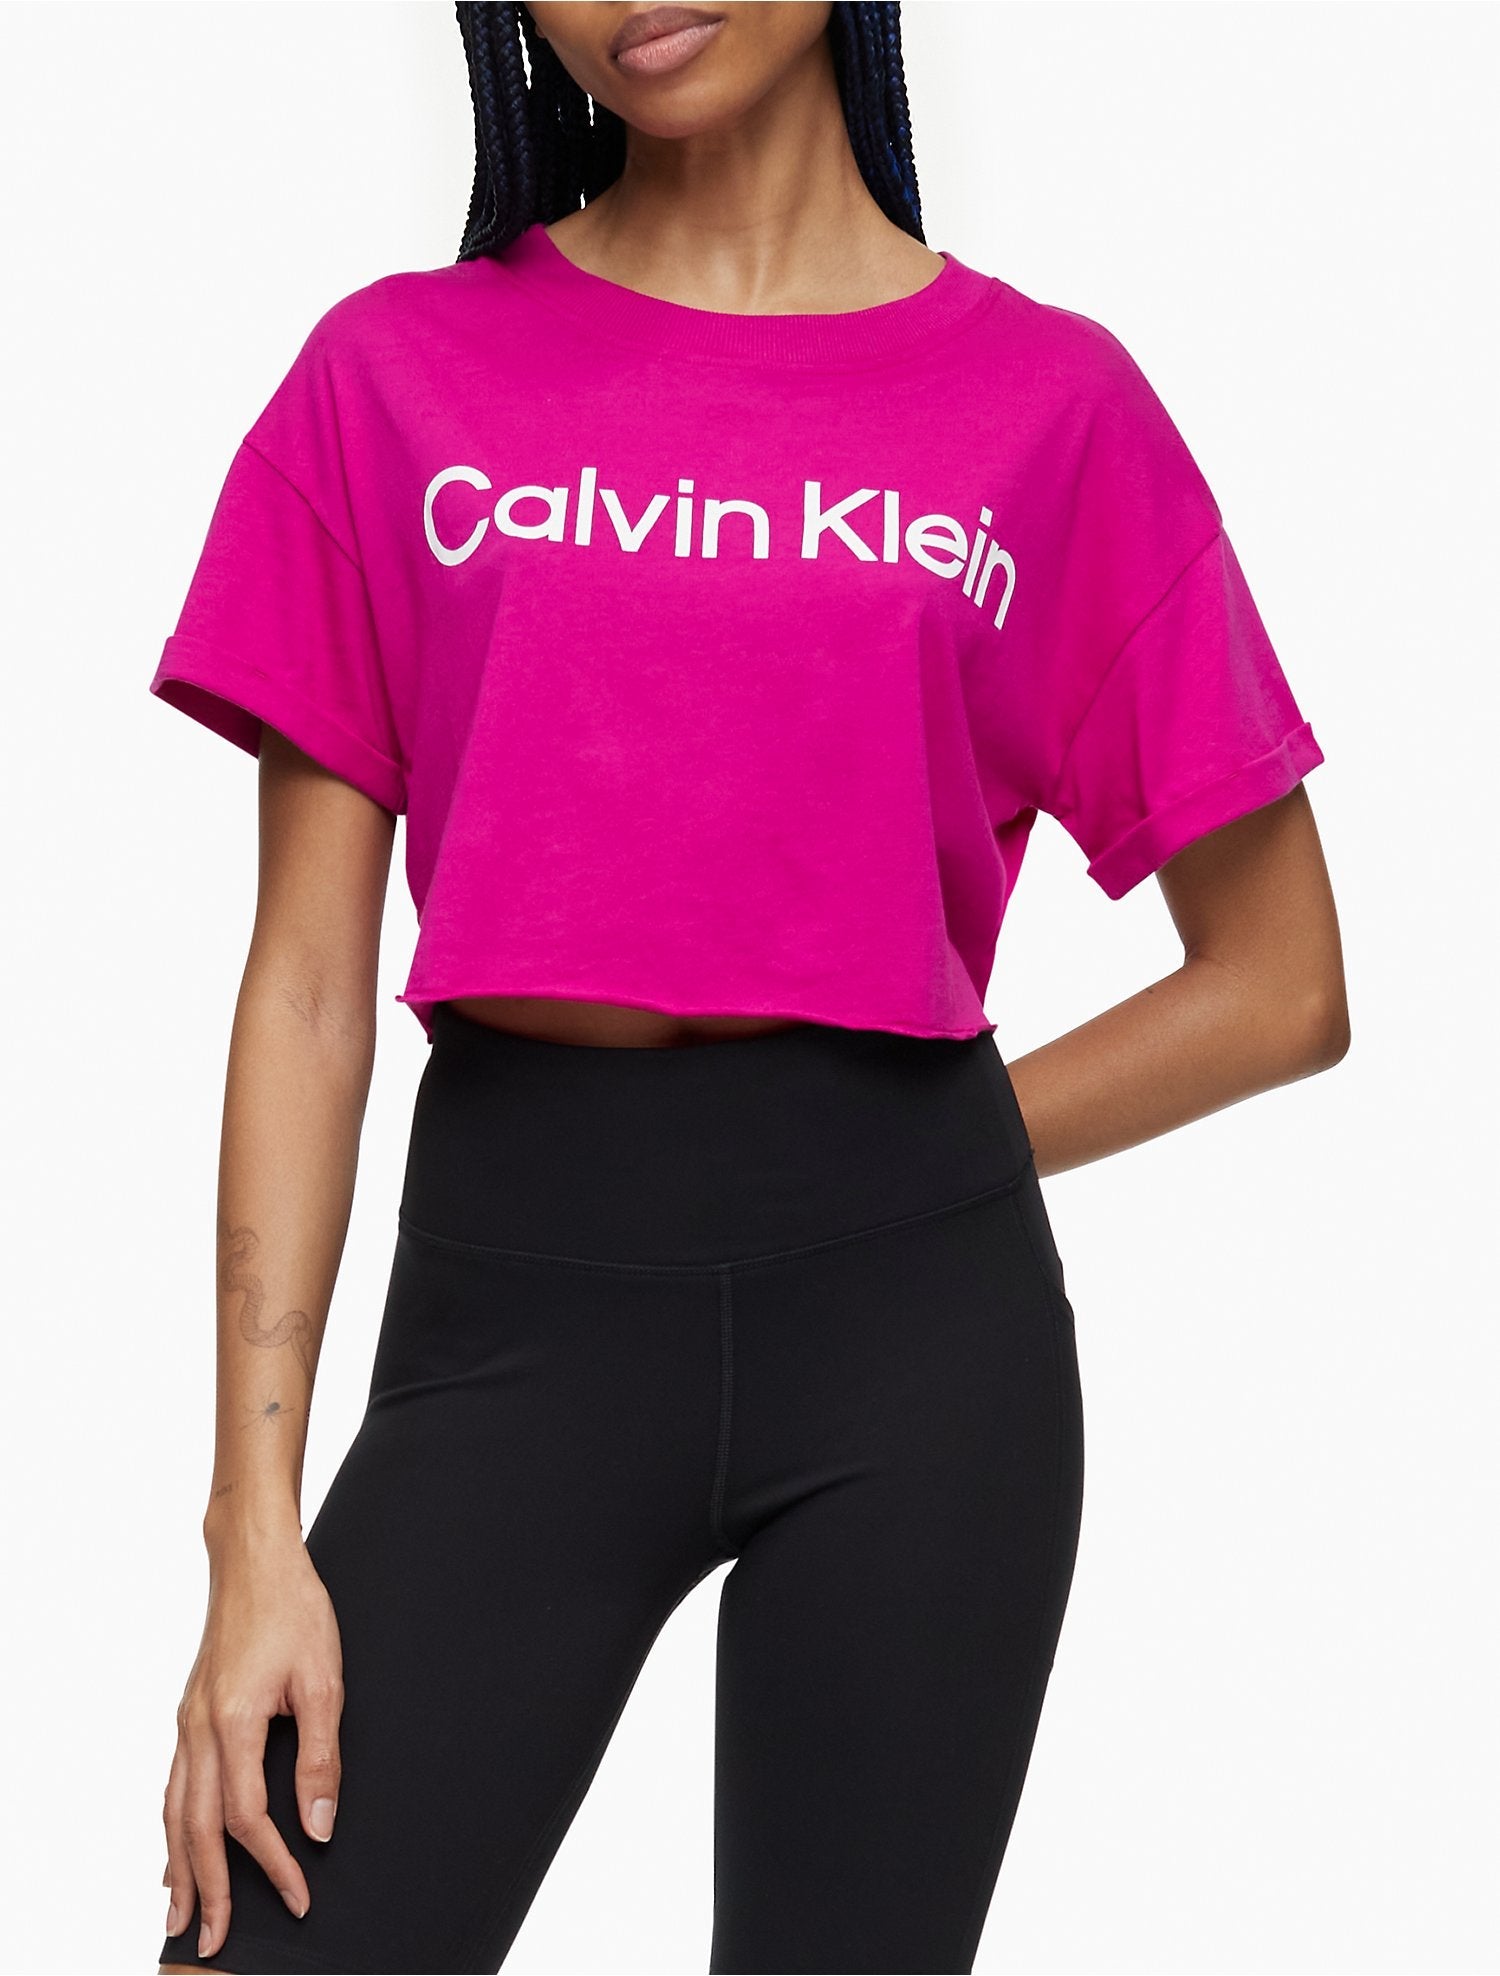 Calvin Klein Performance Logo Rolled Cuff Crop T-Shirt - Women